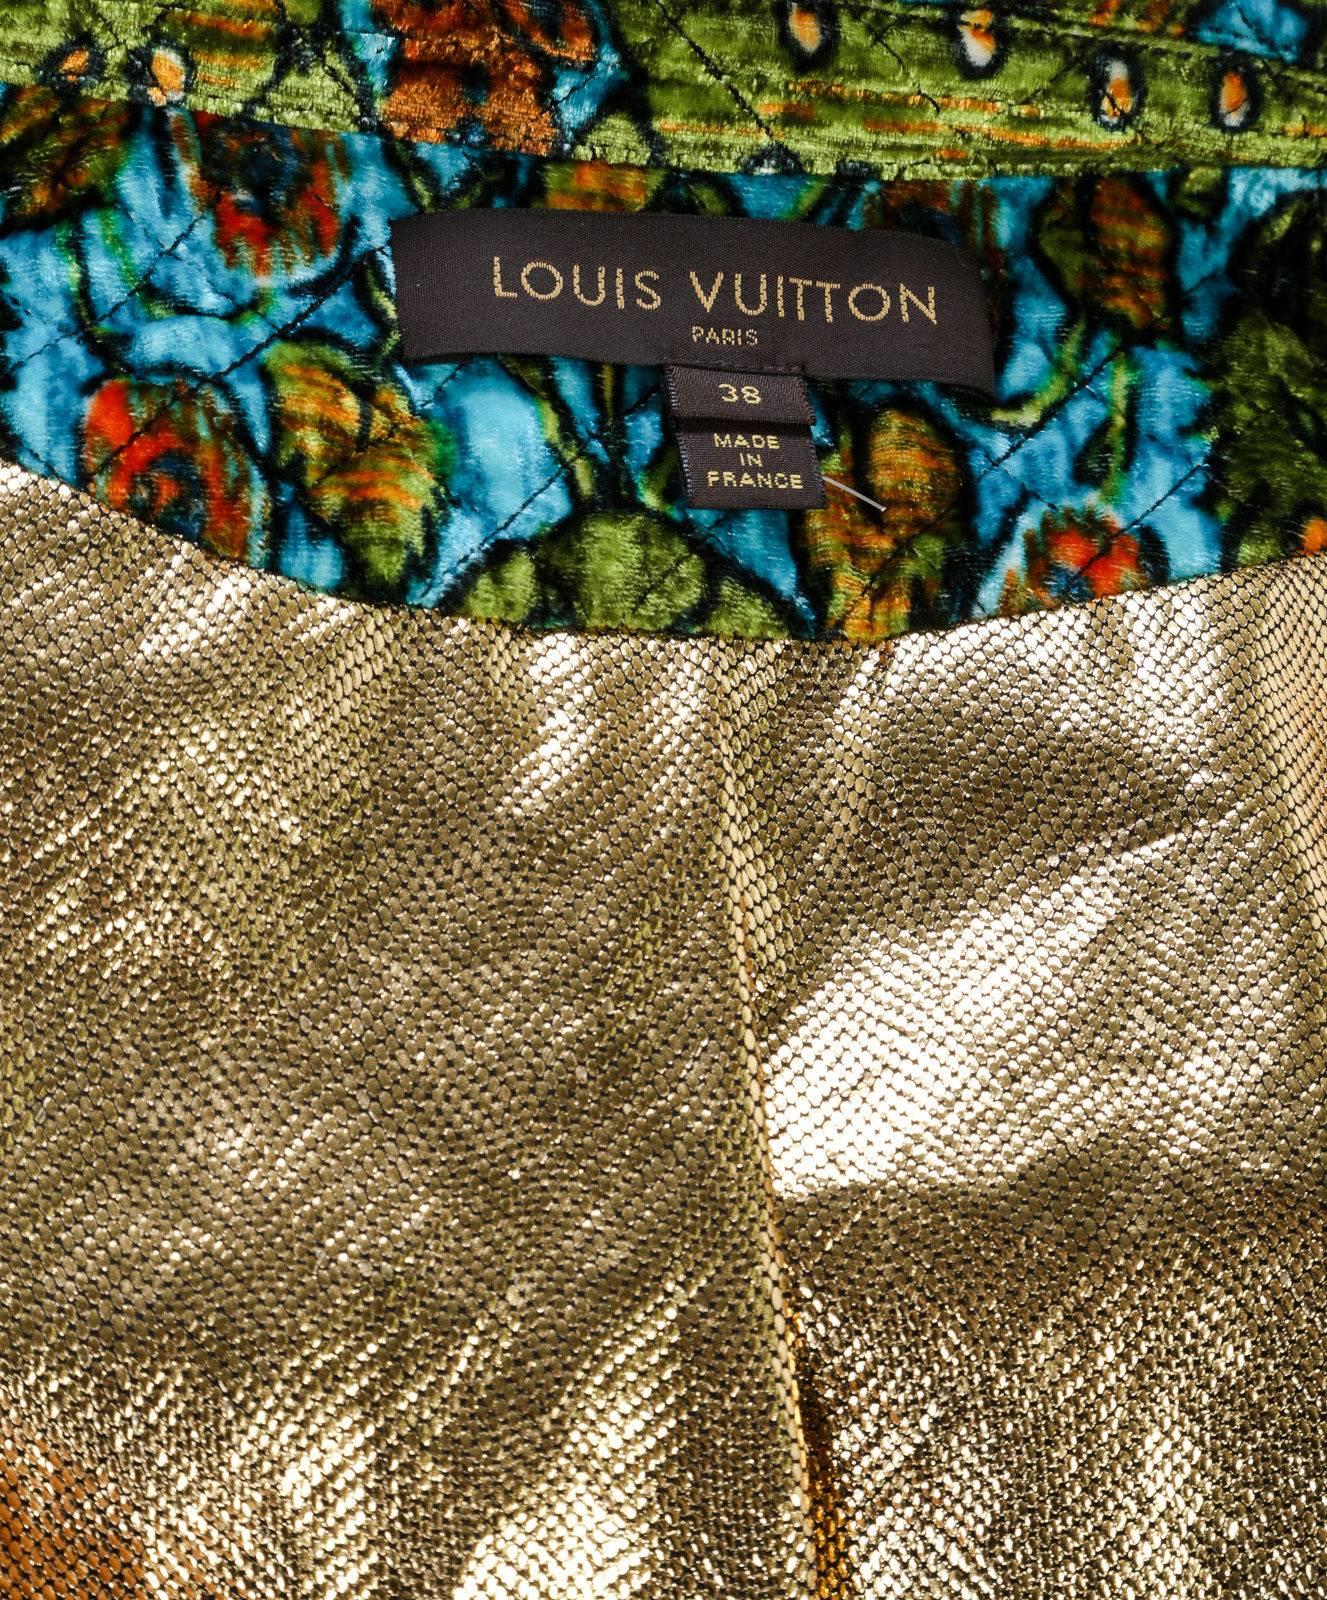 Louis Vuitton Blue Multicolor Velvet Printed Bomber Jacket (Size 38) For Sale 3